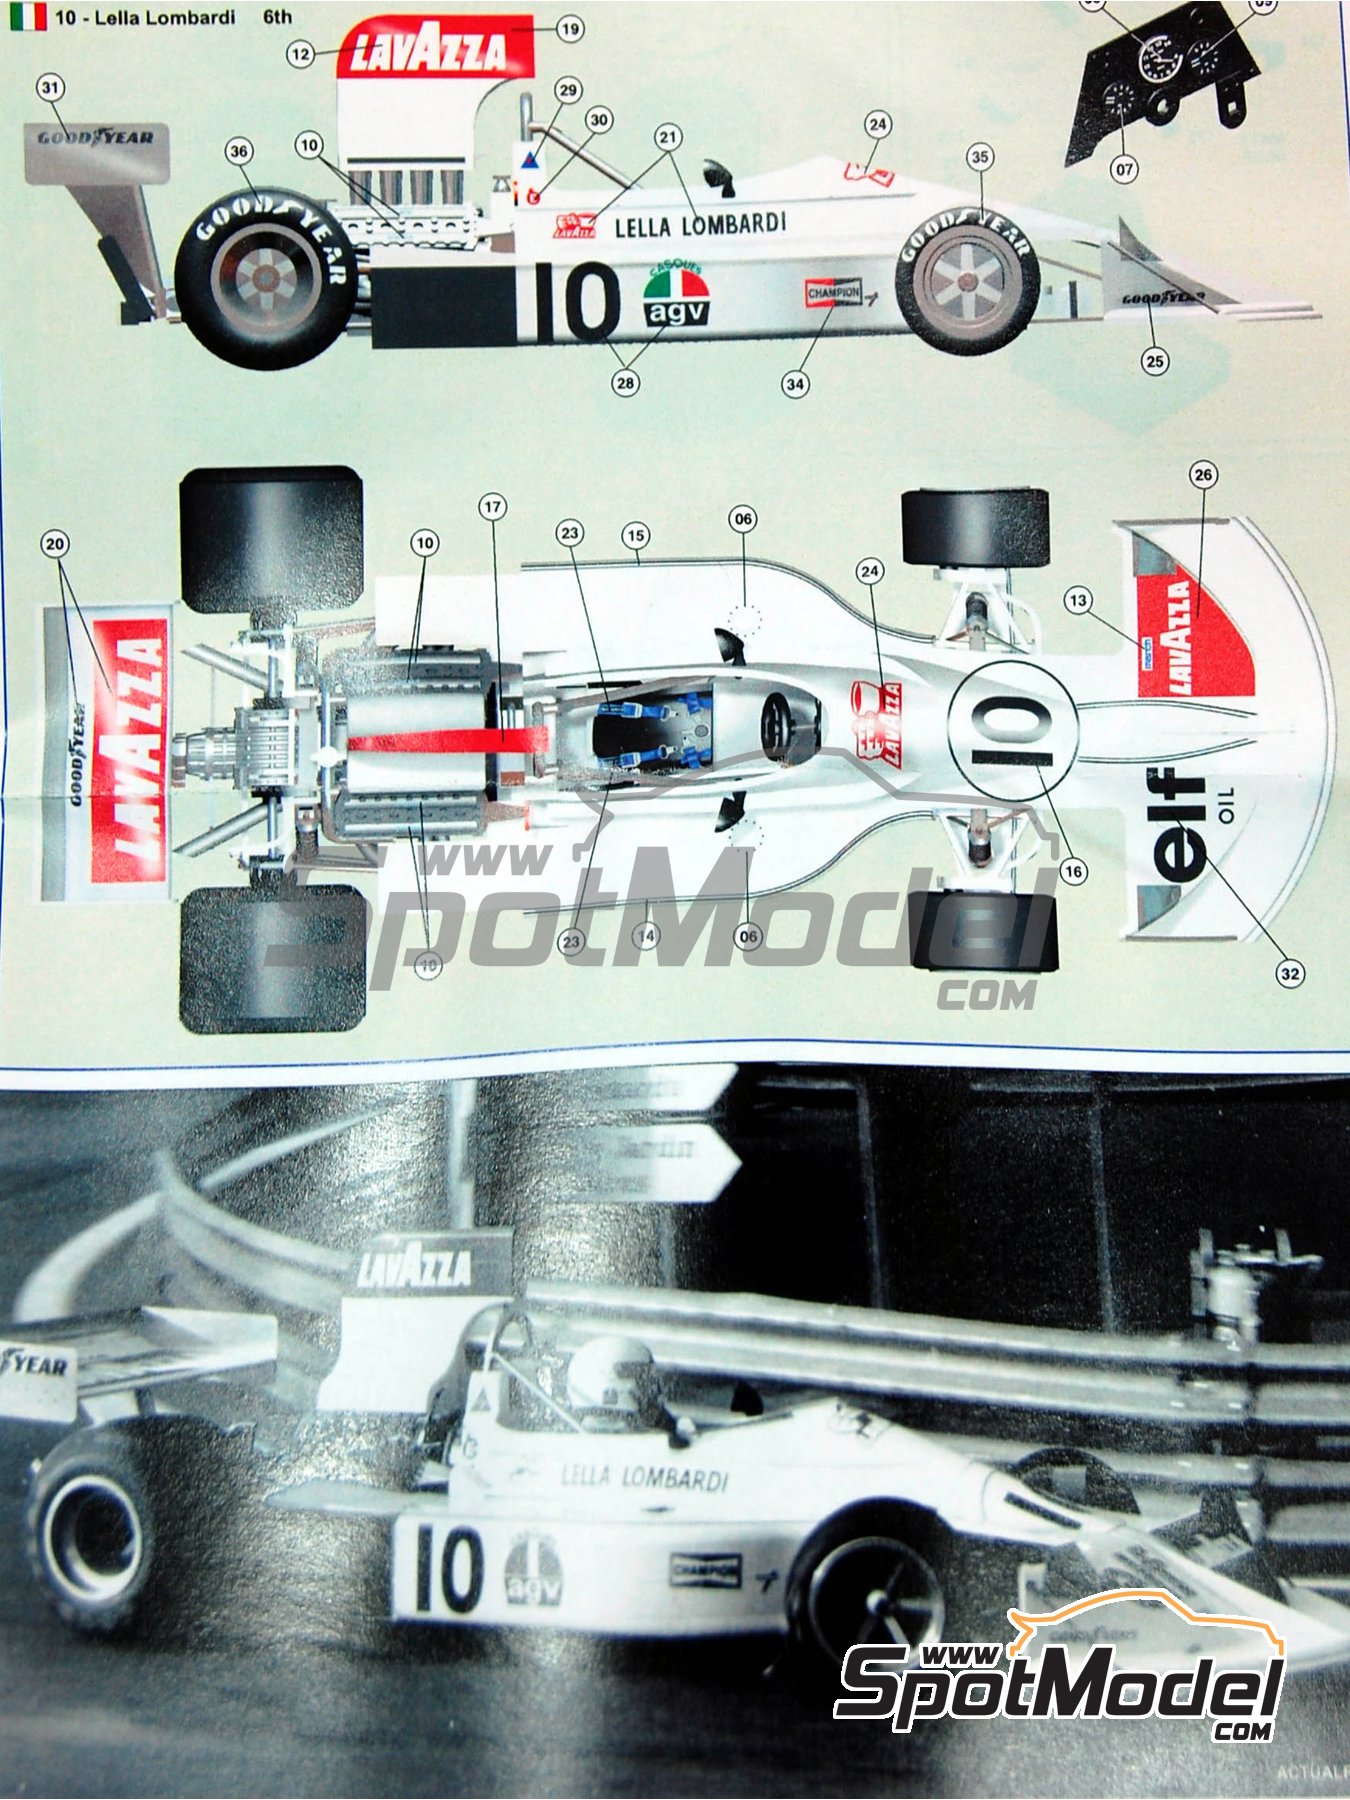 1:43 F1 Car Collection INLAY DISPLAY Showcase LELLA LOMBARDI PACK 